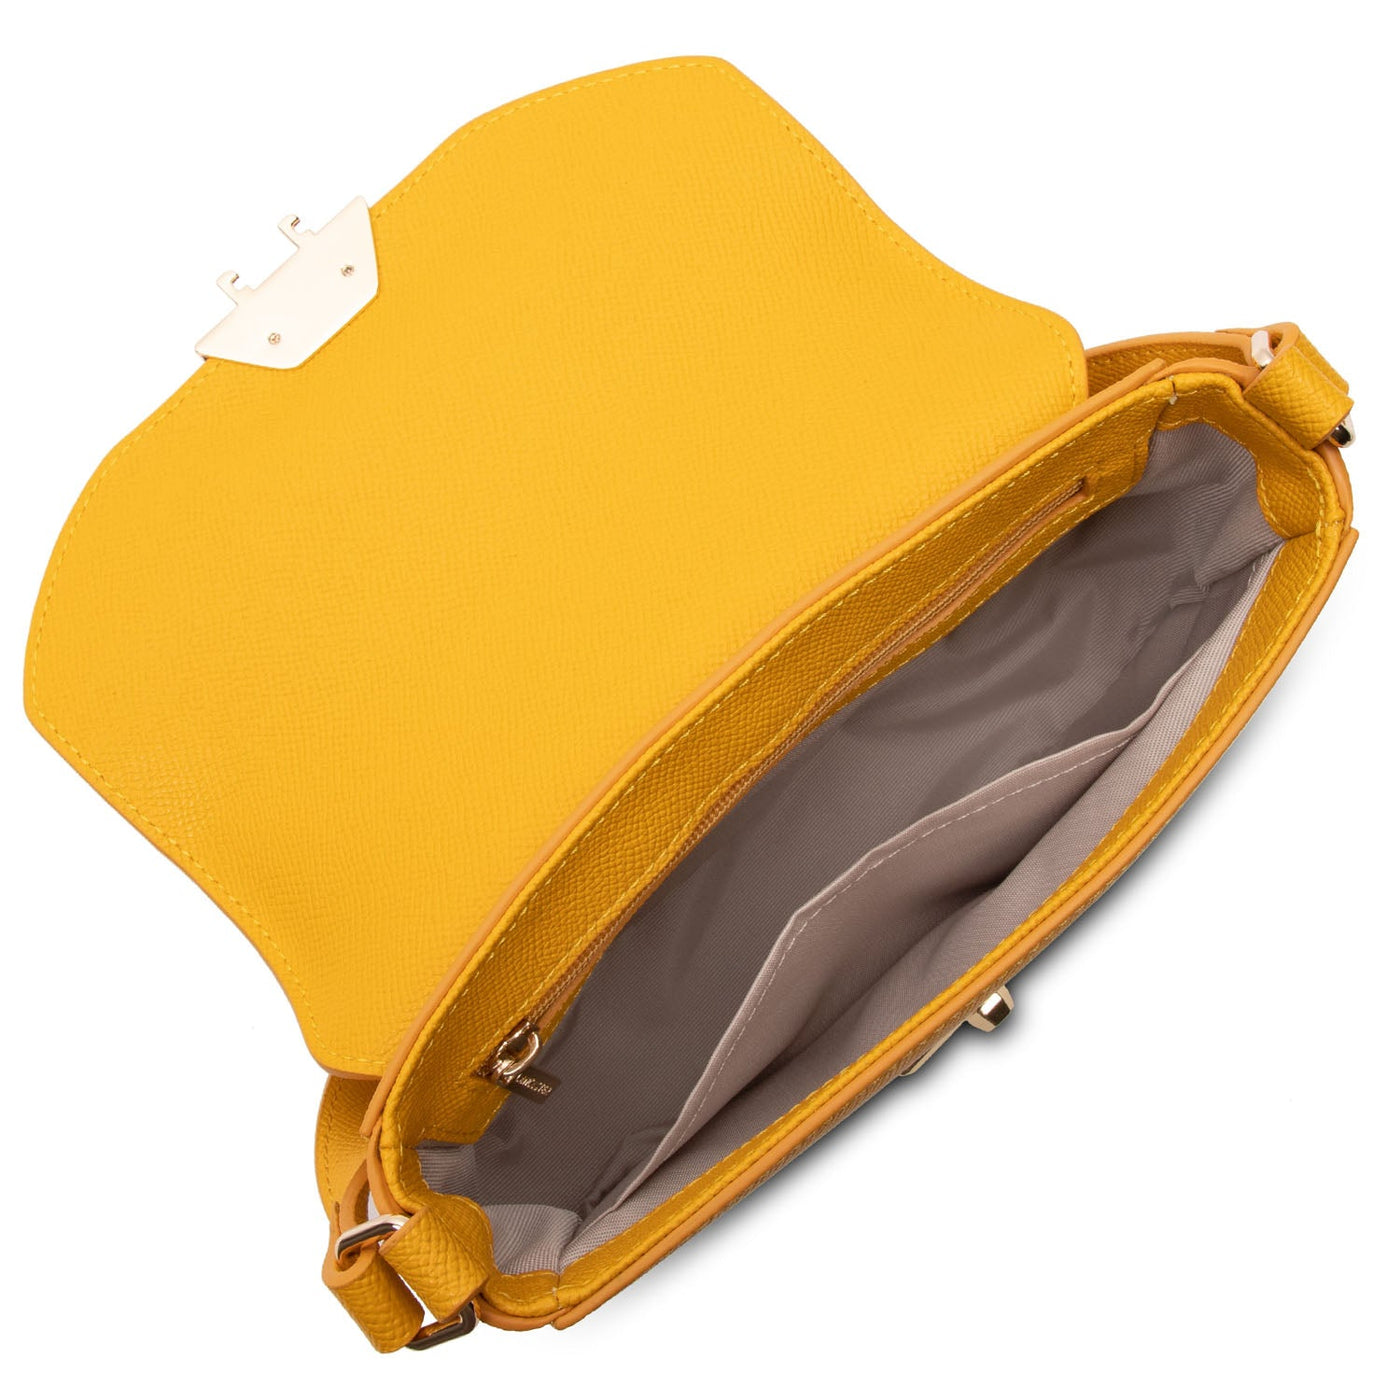 crossbody bag - delphino #couleur_jaune